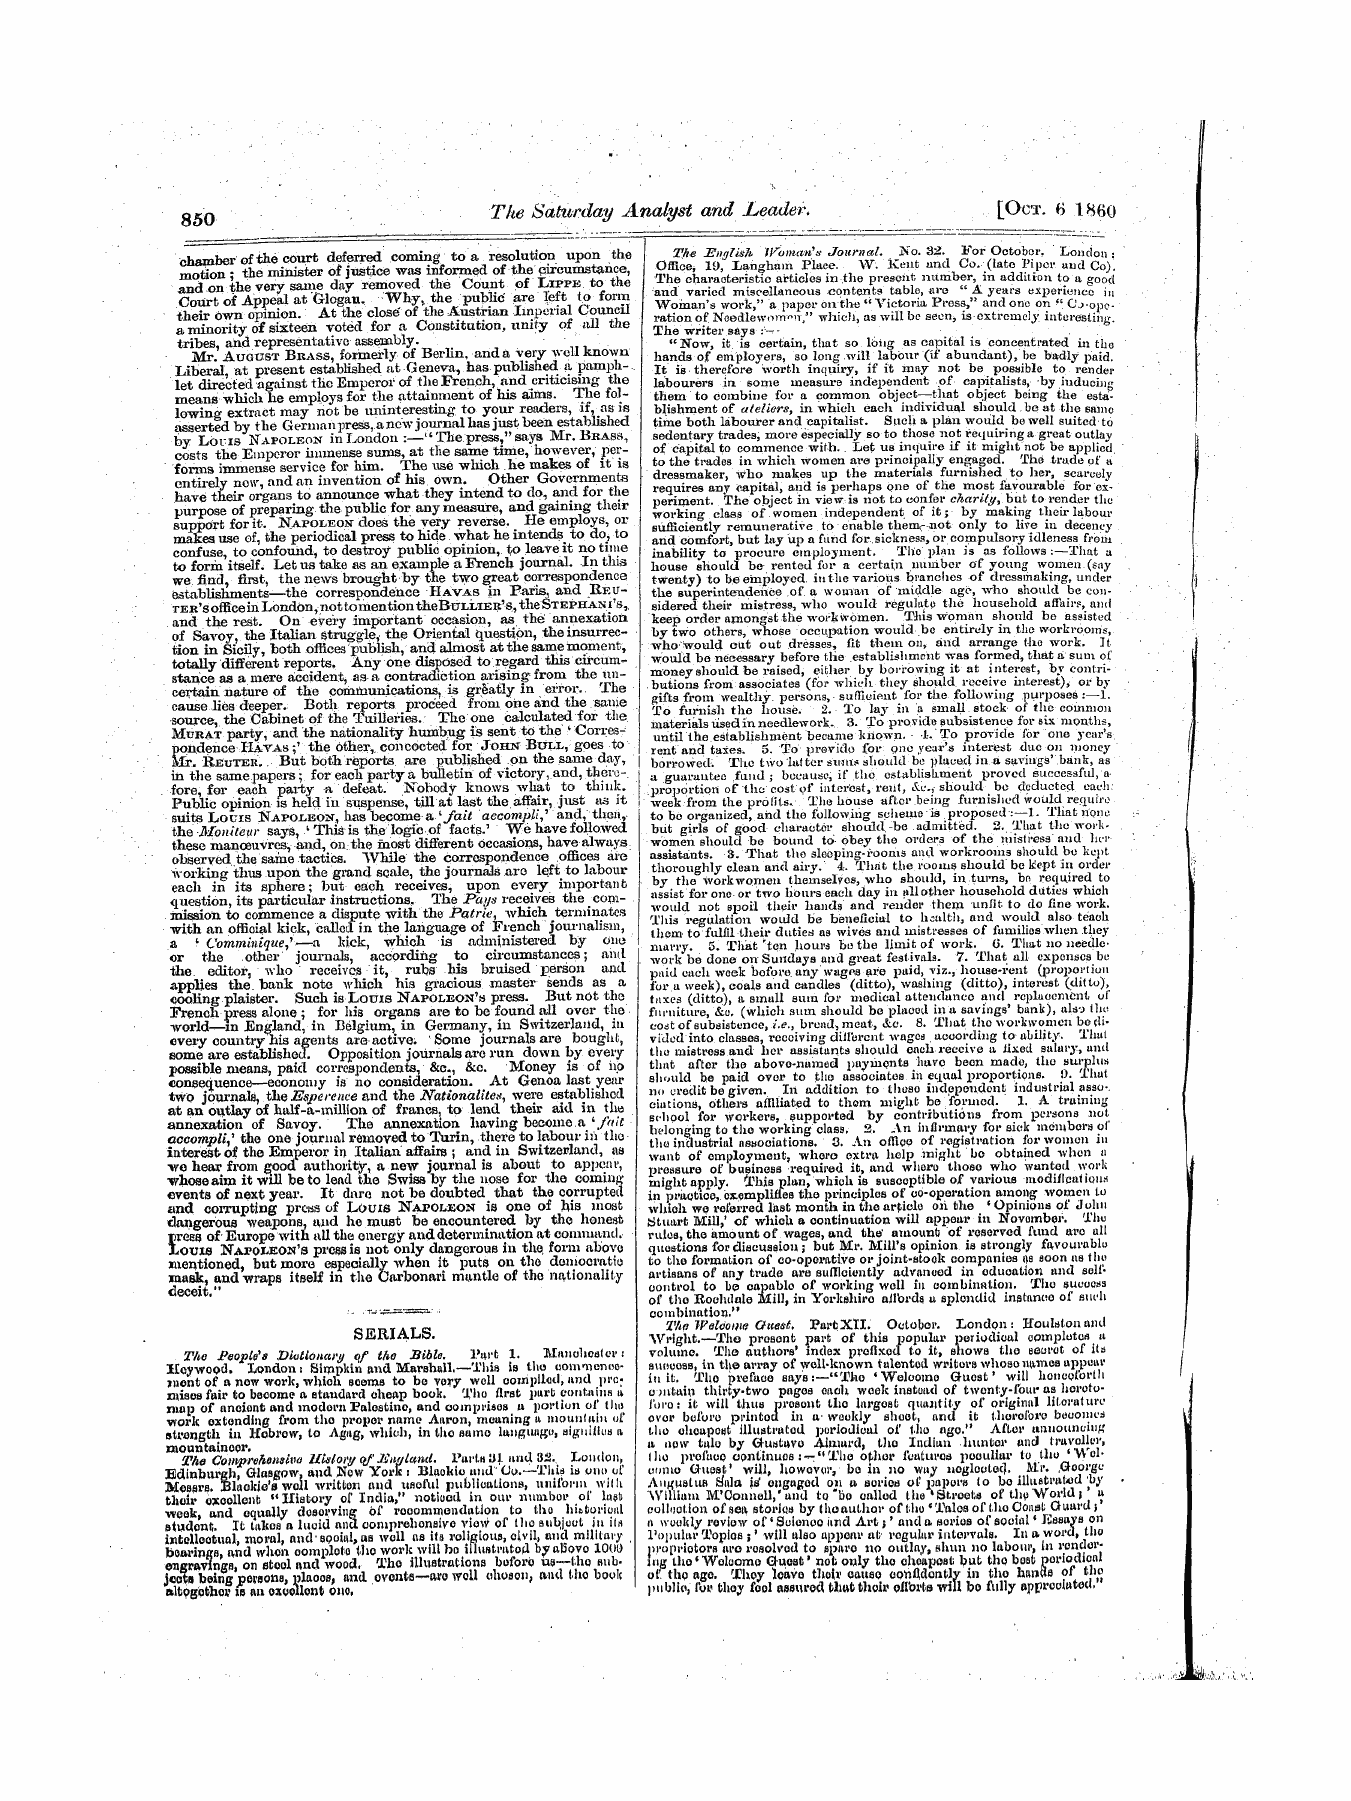 Leader (1850-1860): jS F Y, 1st edition - Serials.